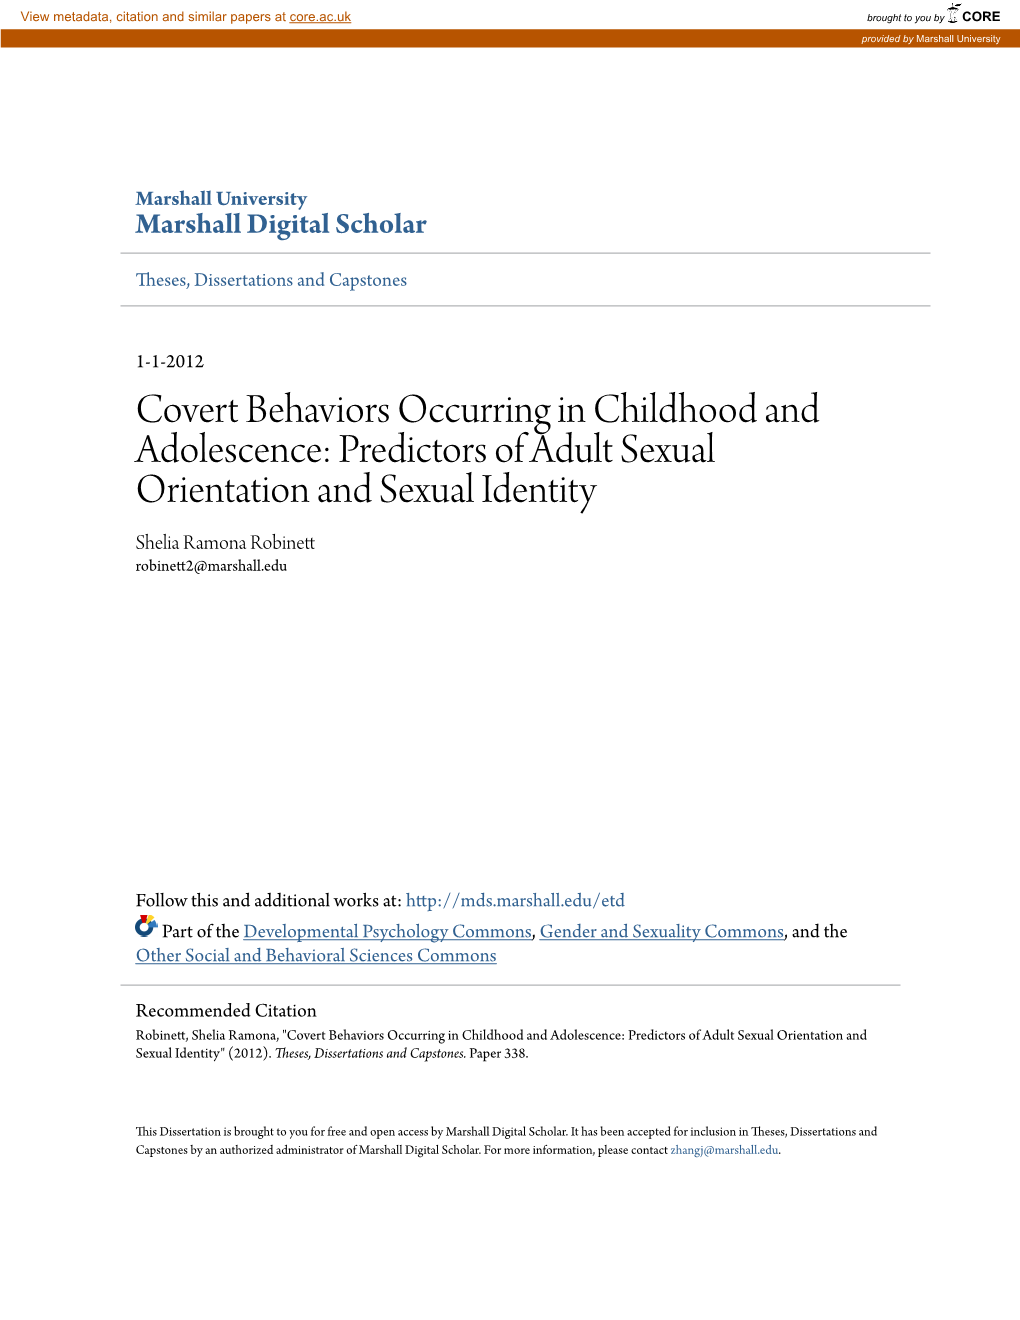 Predictors of Adult Sexual Orientation and Sexual Identity Shelia Ramona Robinett Robinett2@Marshall.Edu